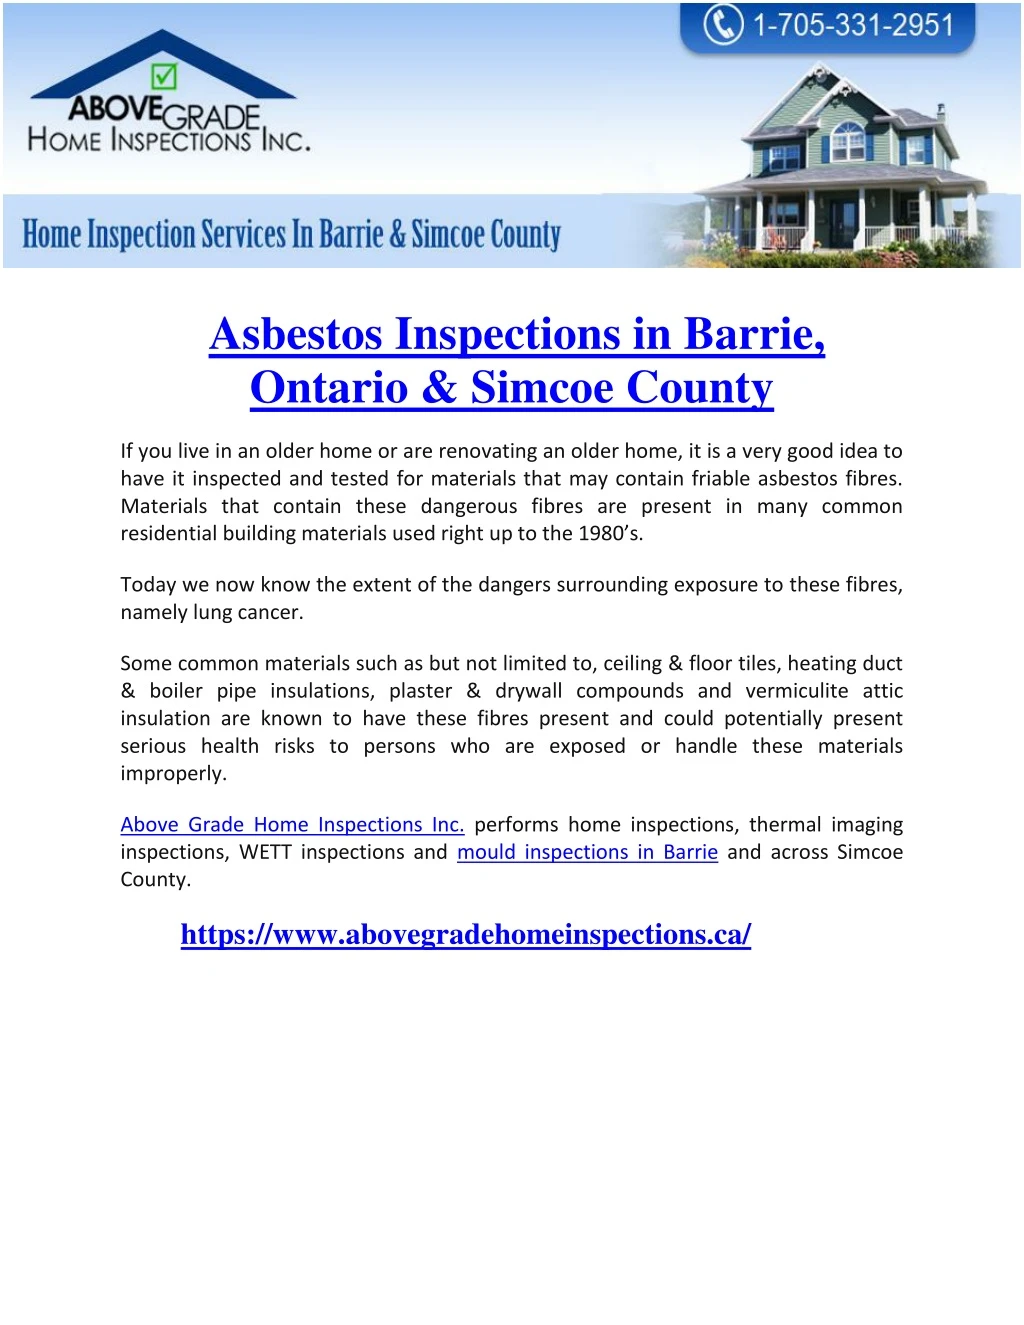 asbestos inspections in barrie ontario simcoe